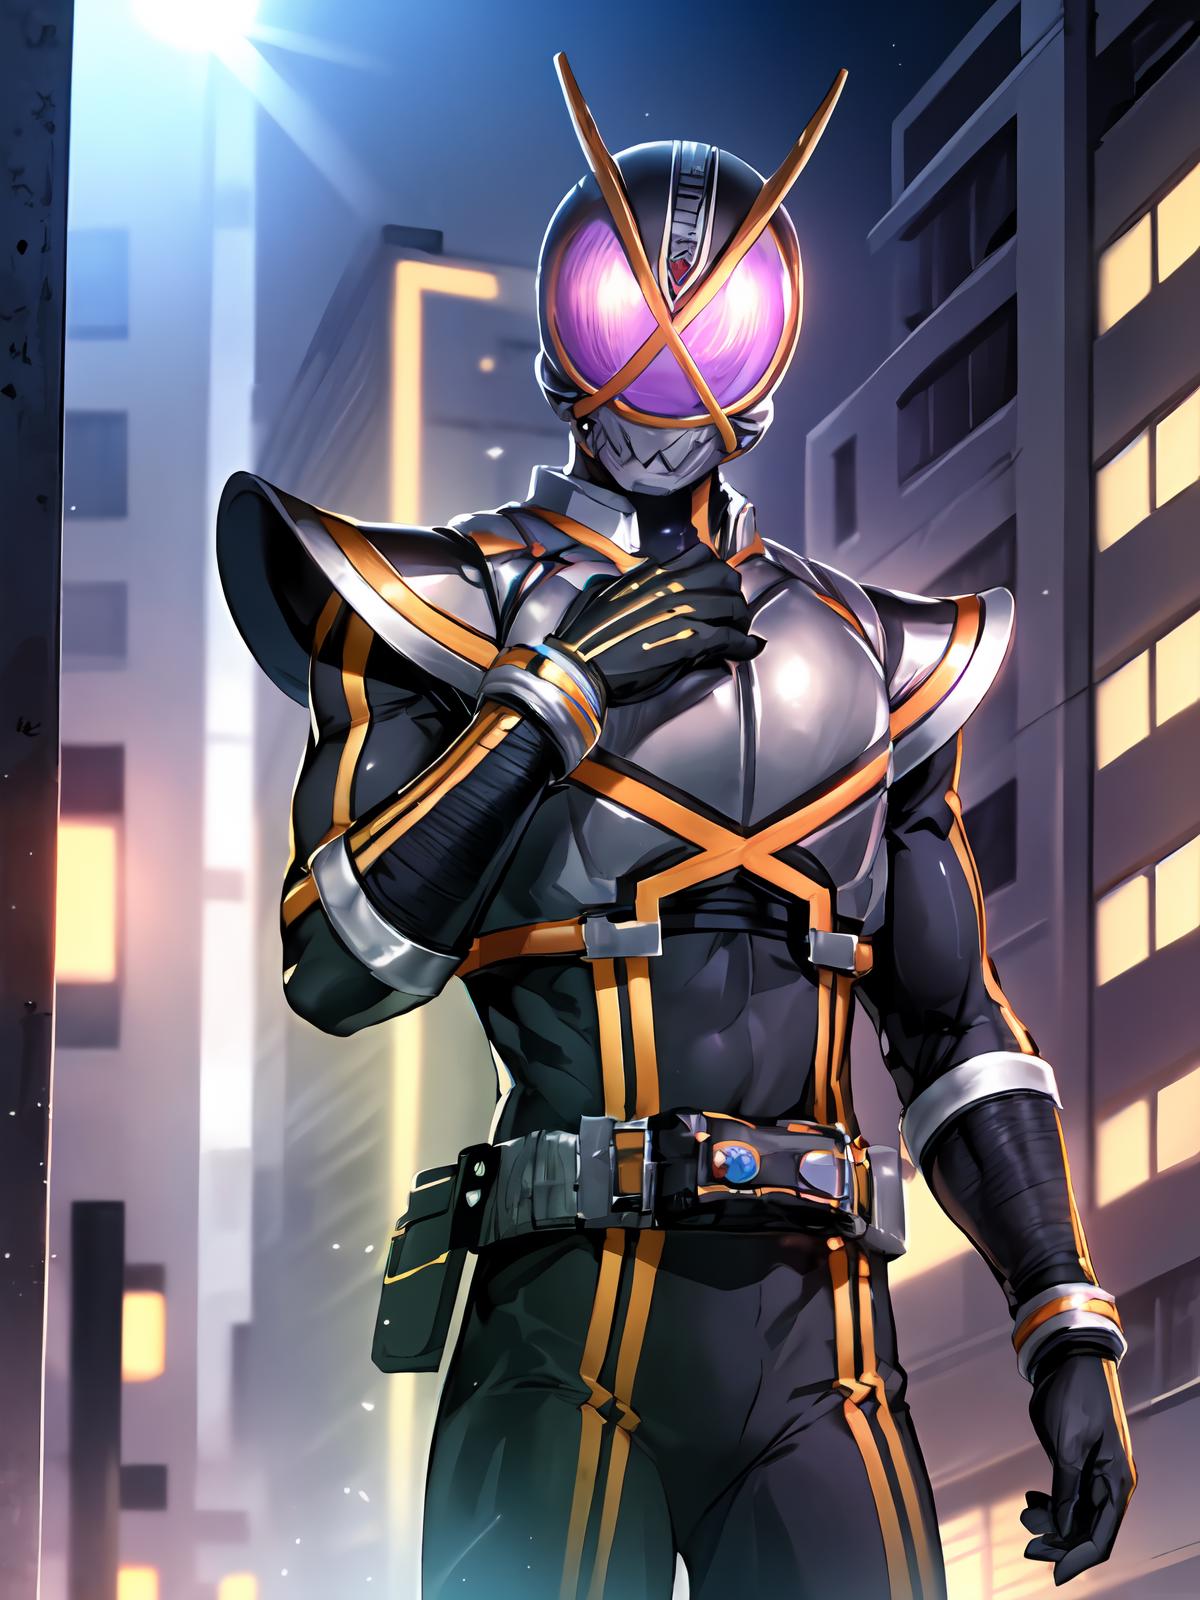 Kamen rider Kaixa - Flexible Suit image by Chichiue_Pendragon